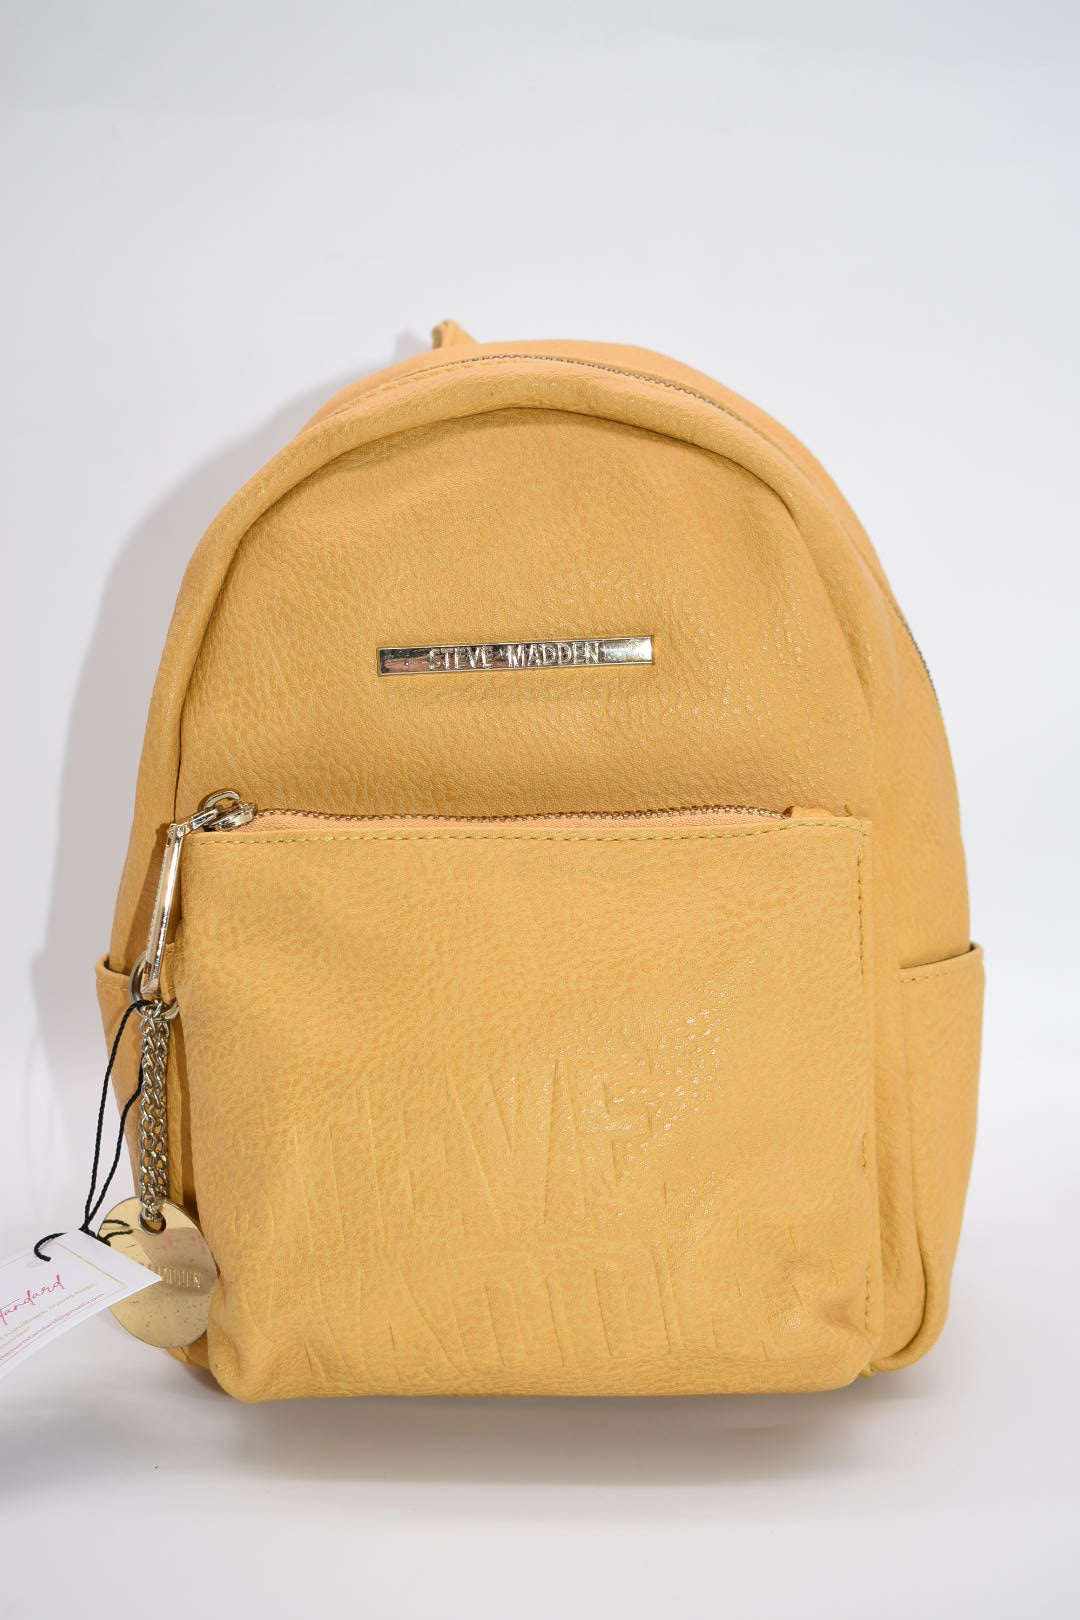 Steve Madden Bailey Backpack in Mustard Yellow